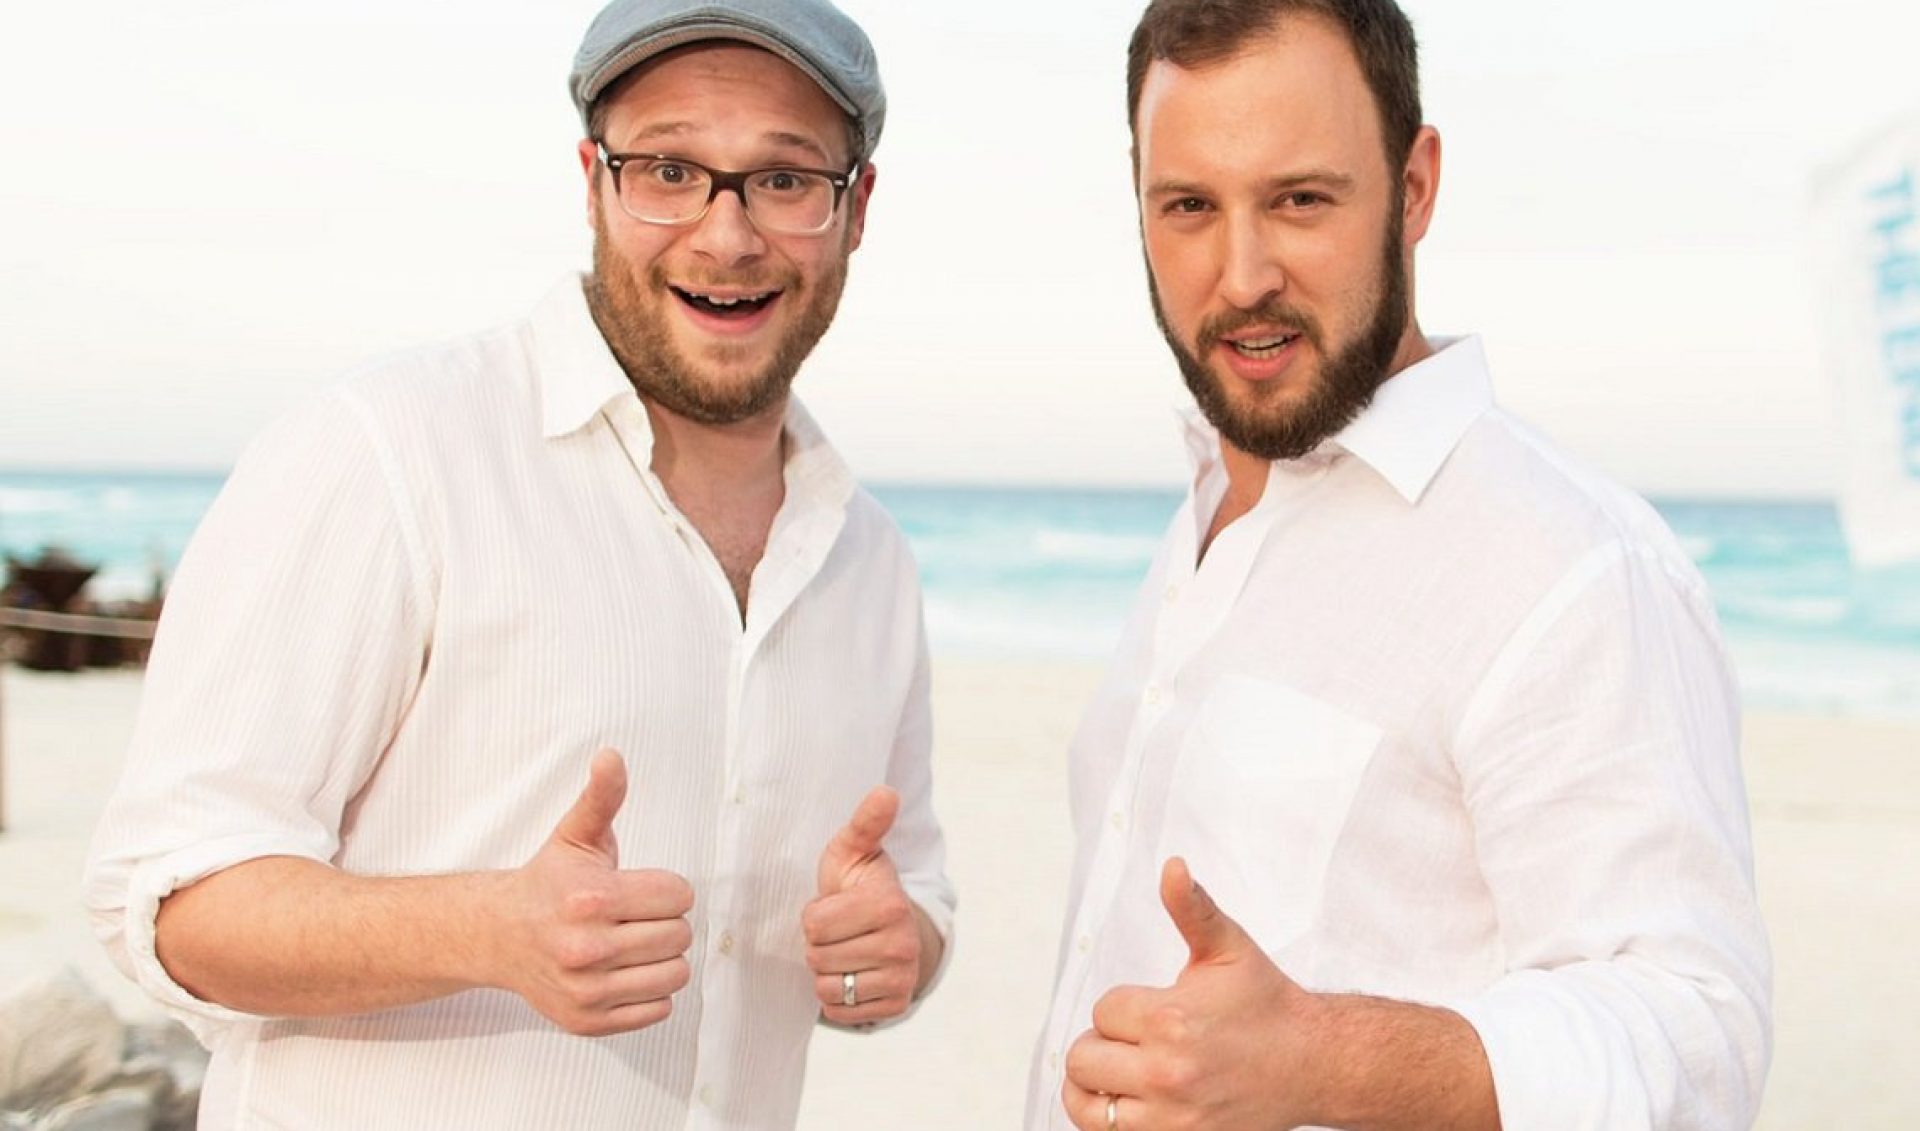 Hulu Picks Up Comedy Pilot ‘Future Man’ From Seth Rogen, Evan Goldberg